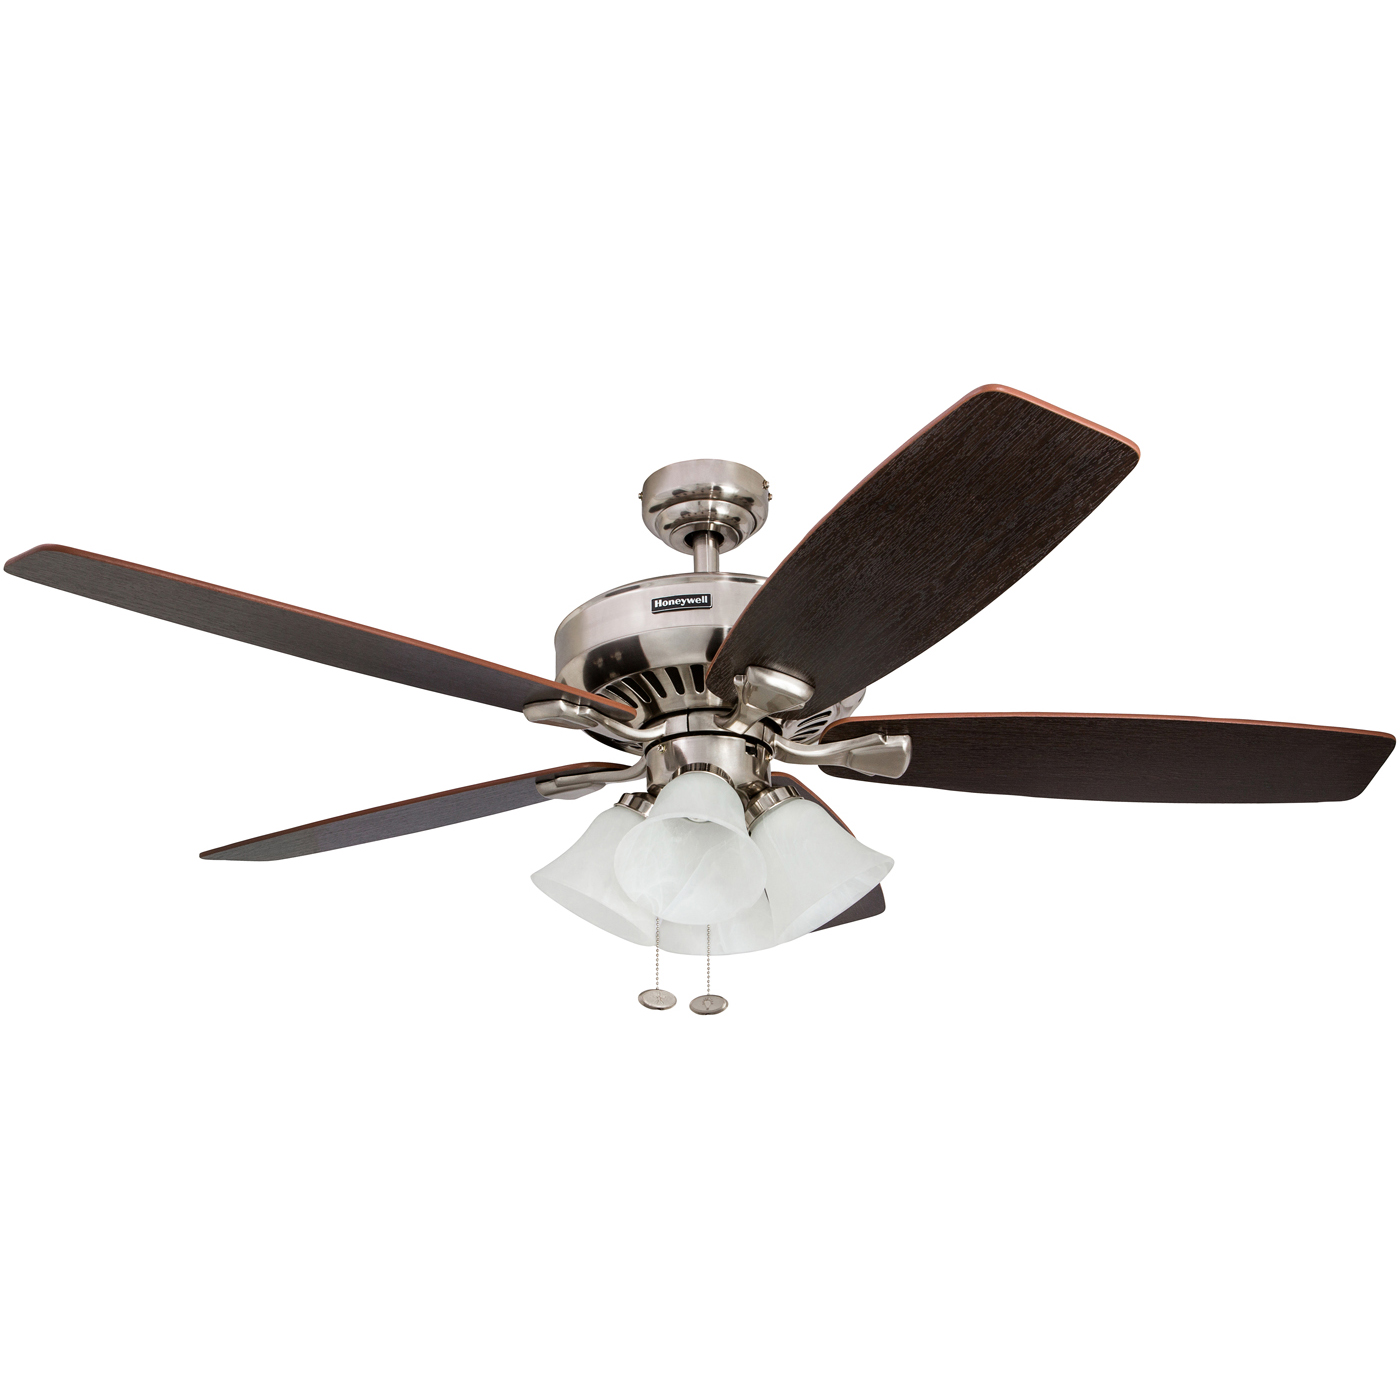 52" Honeywell Hamilton Ceiling Fan, Brushed Nickel - image 1 of 4